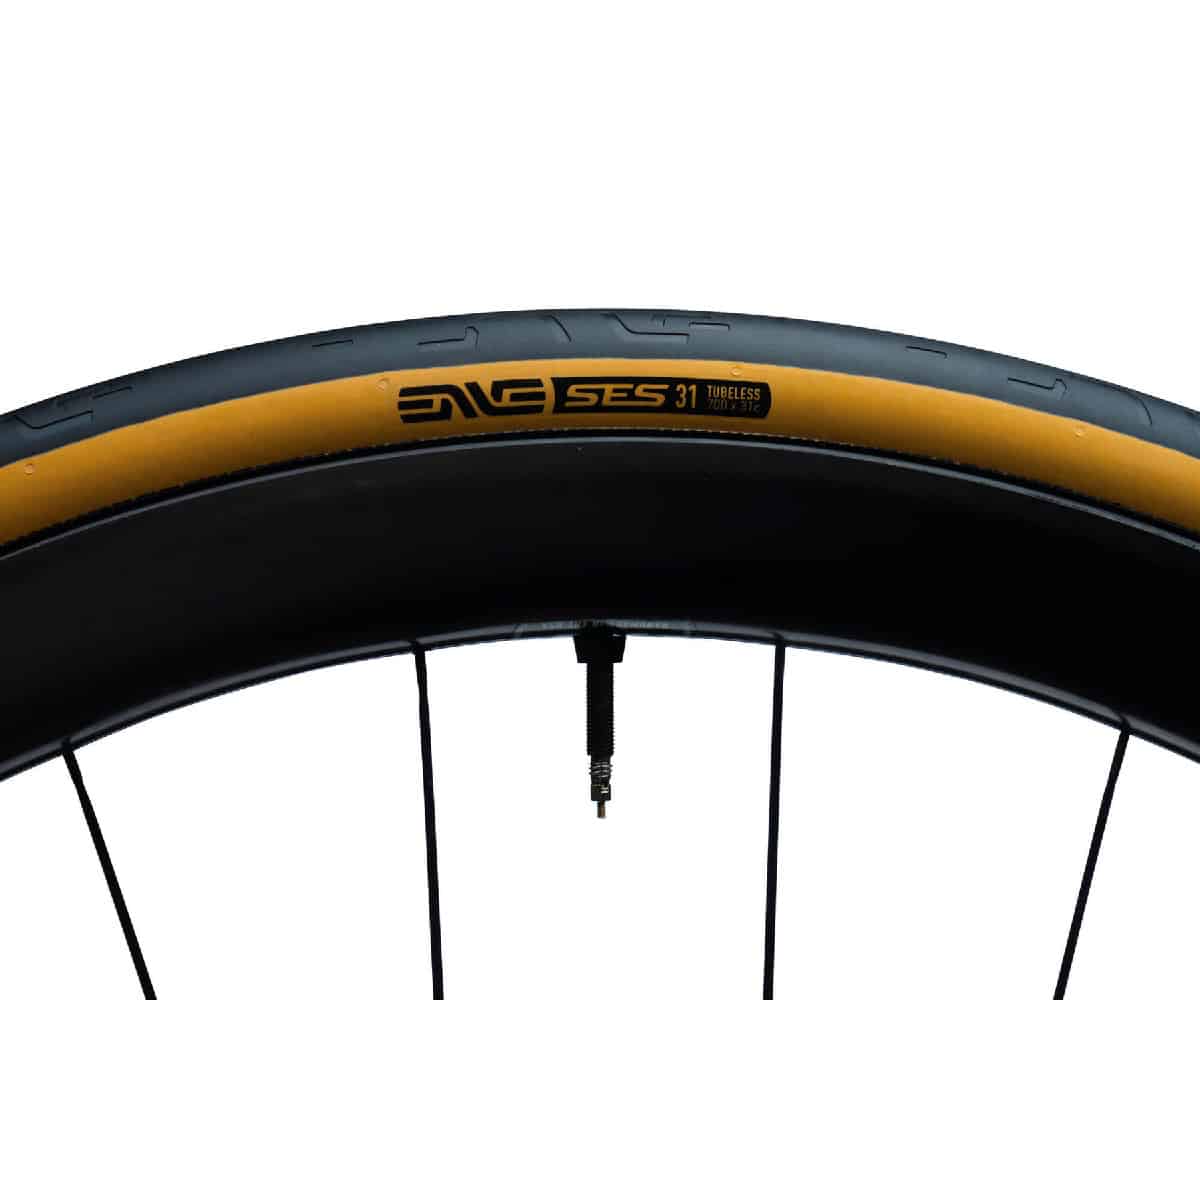 ENVE SES Road Tire Tan Sidewall 31mm